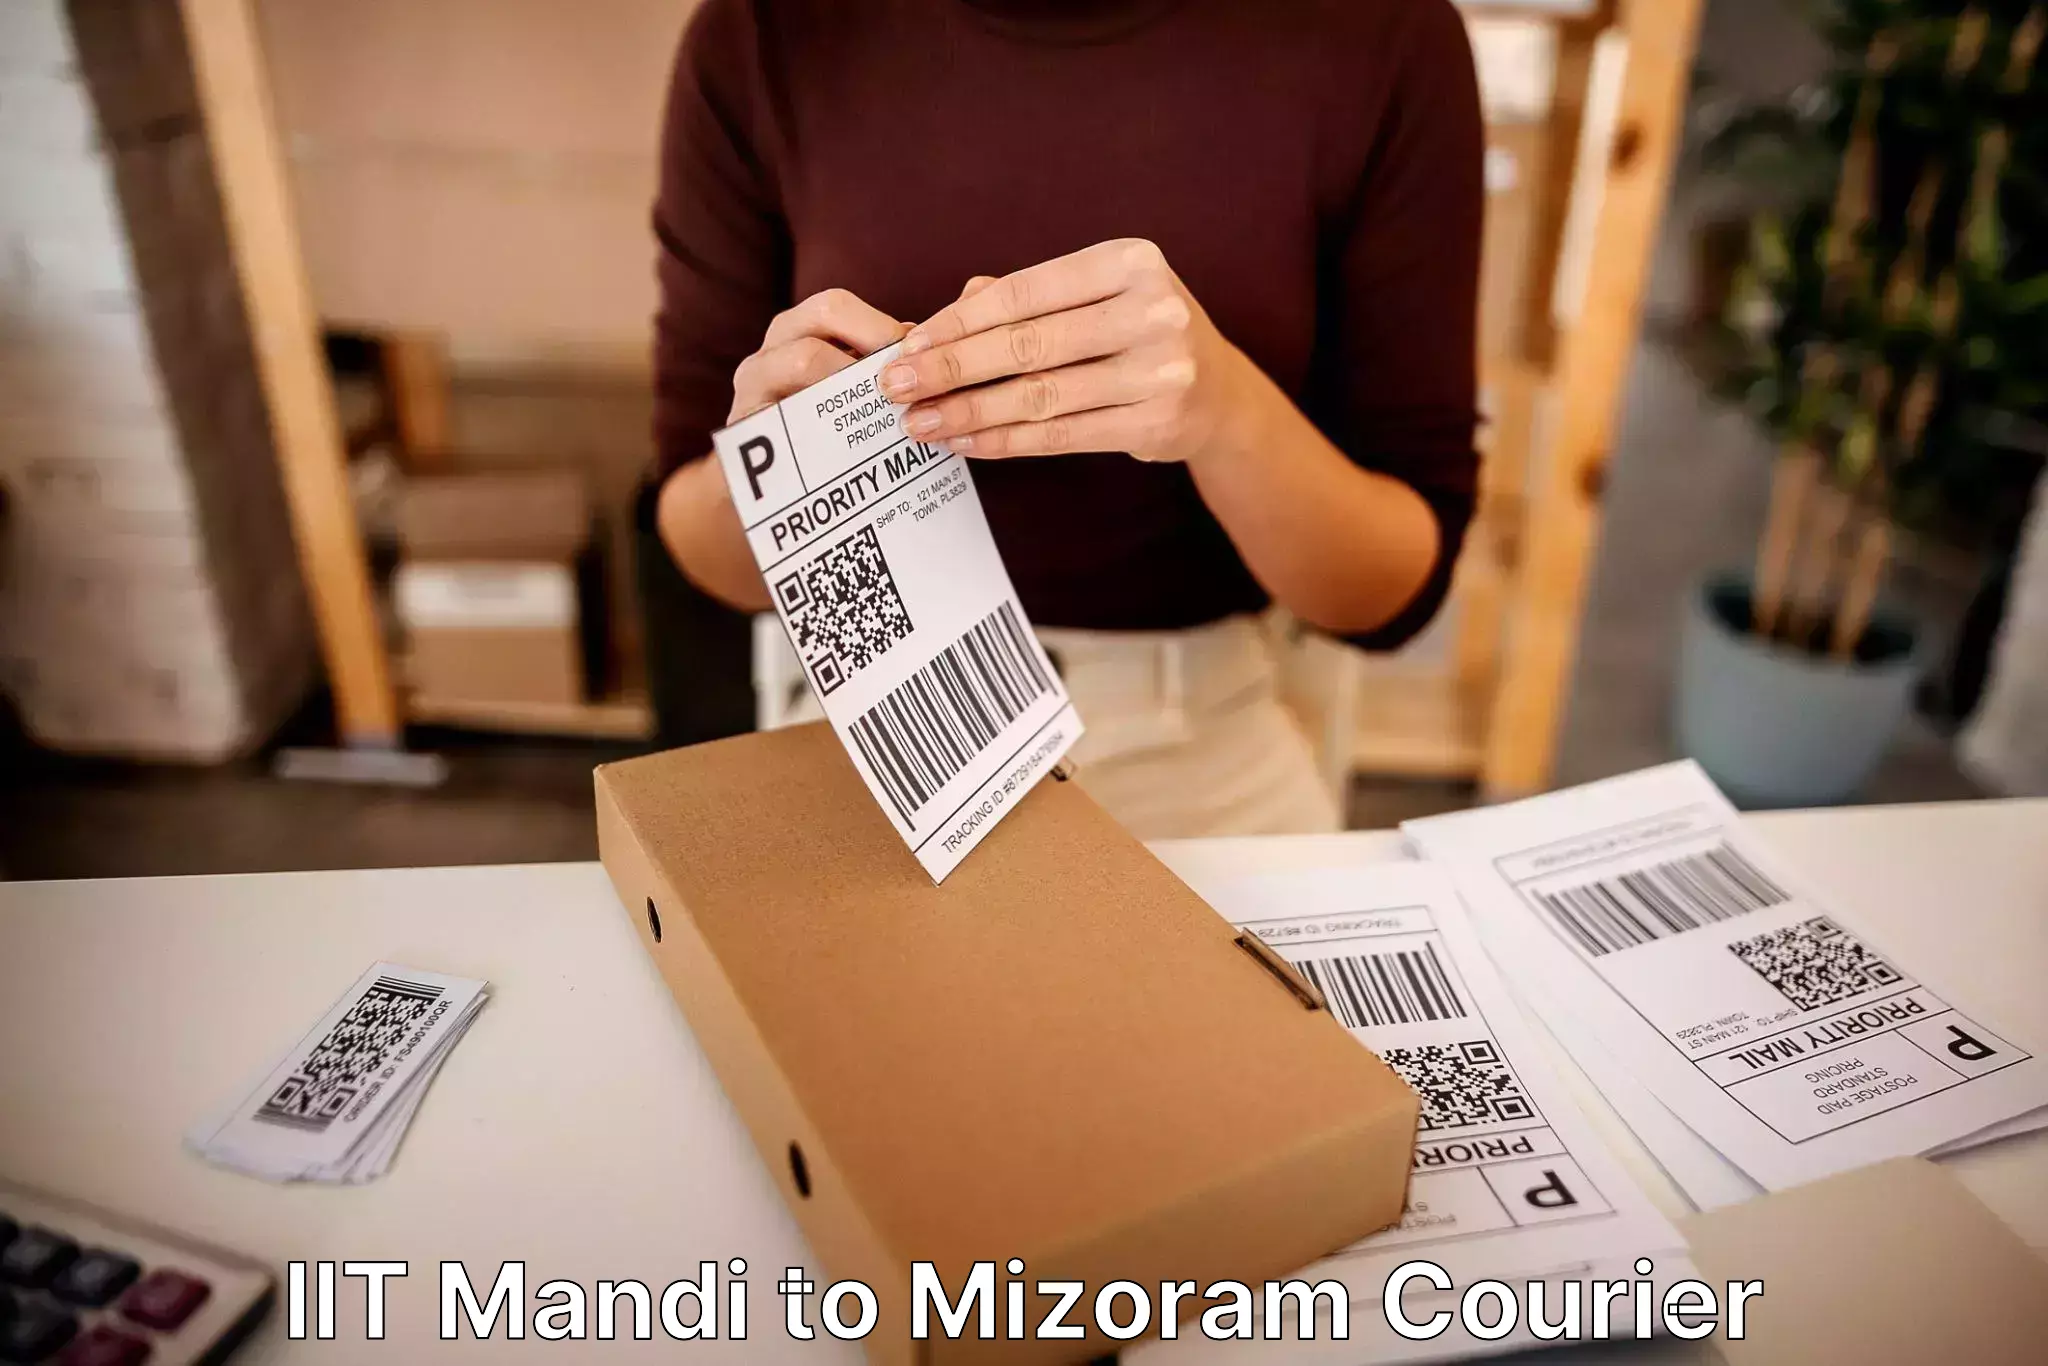 Quality moving company IIT Mandi to Mizoram